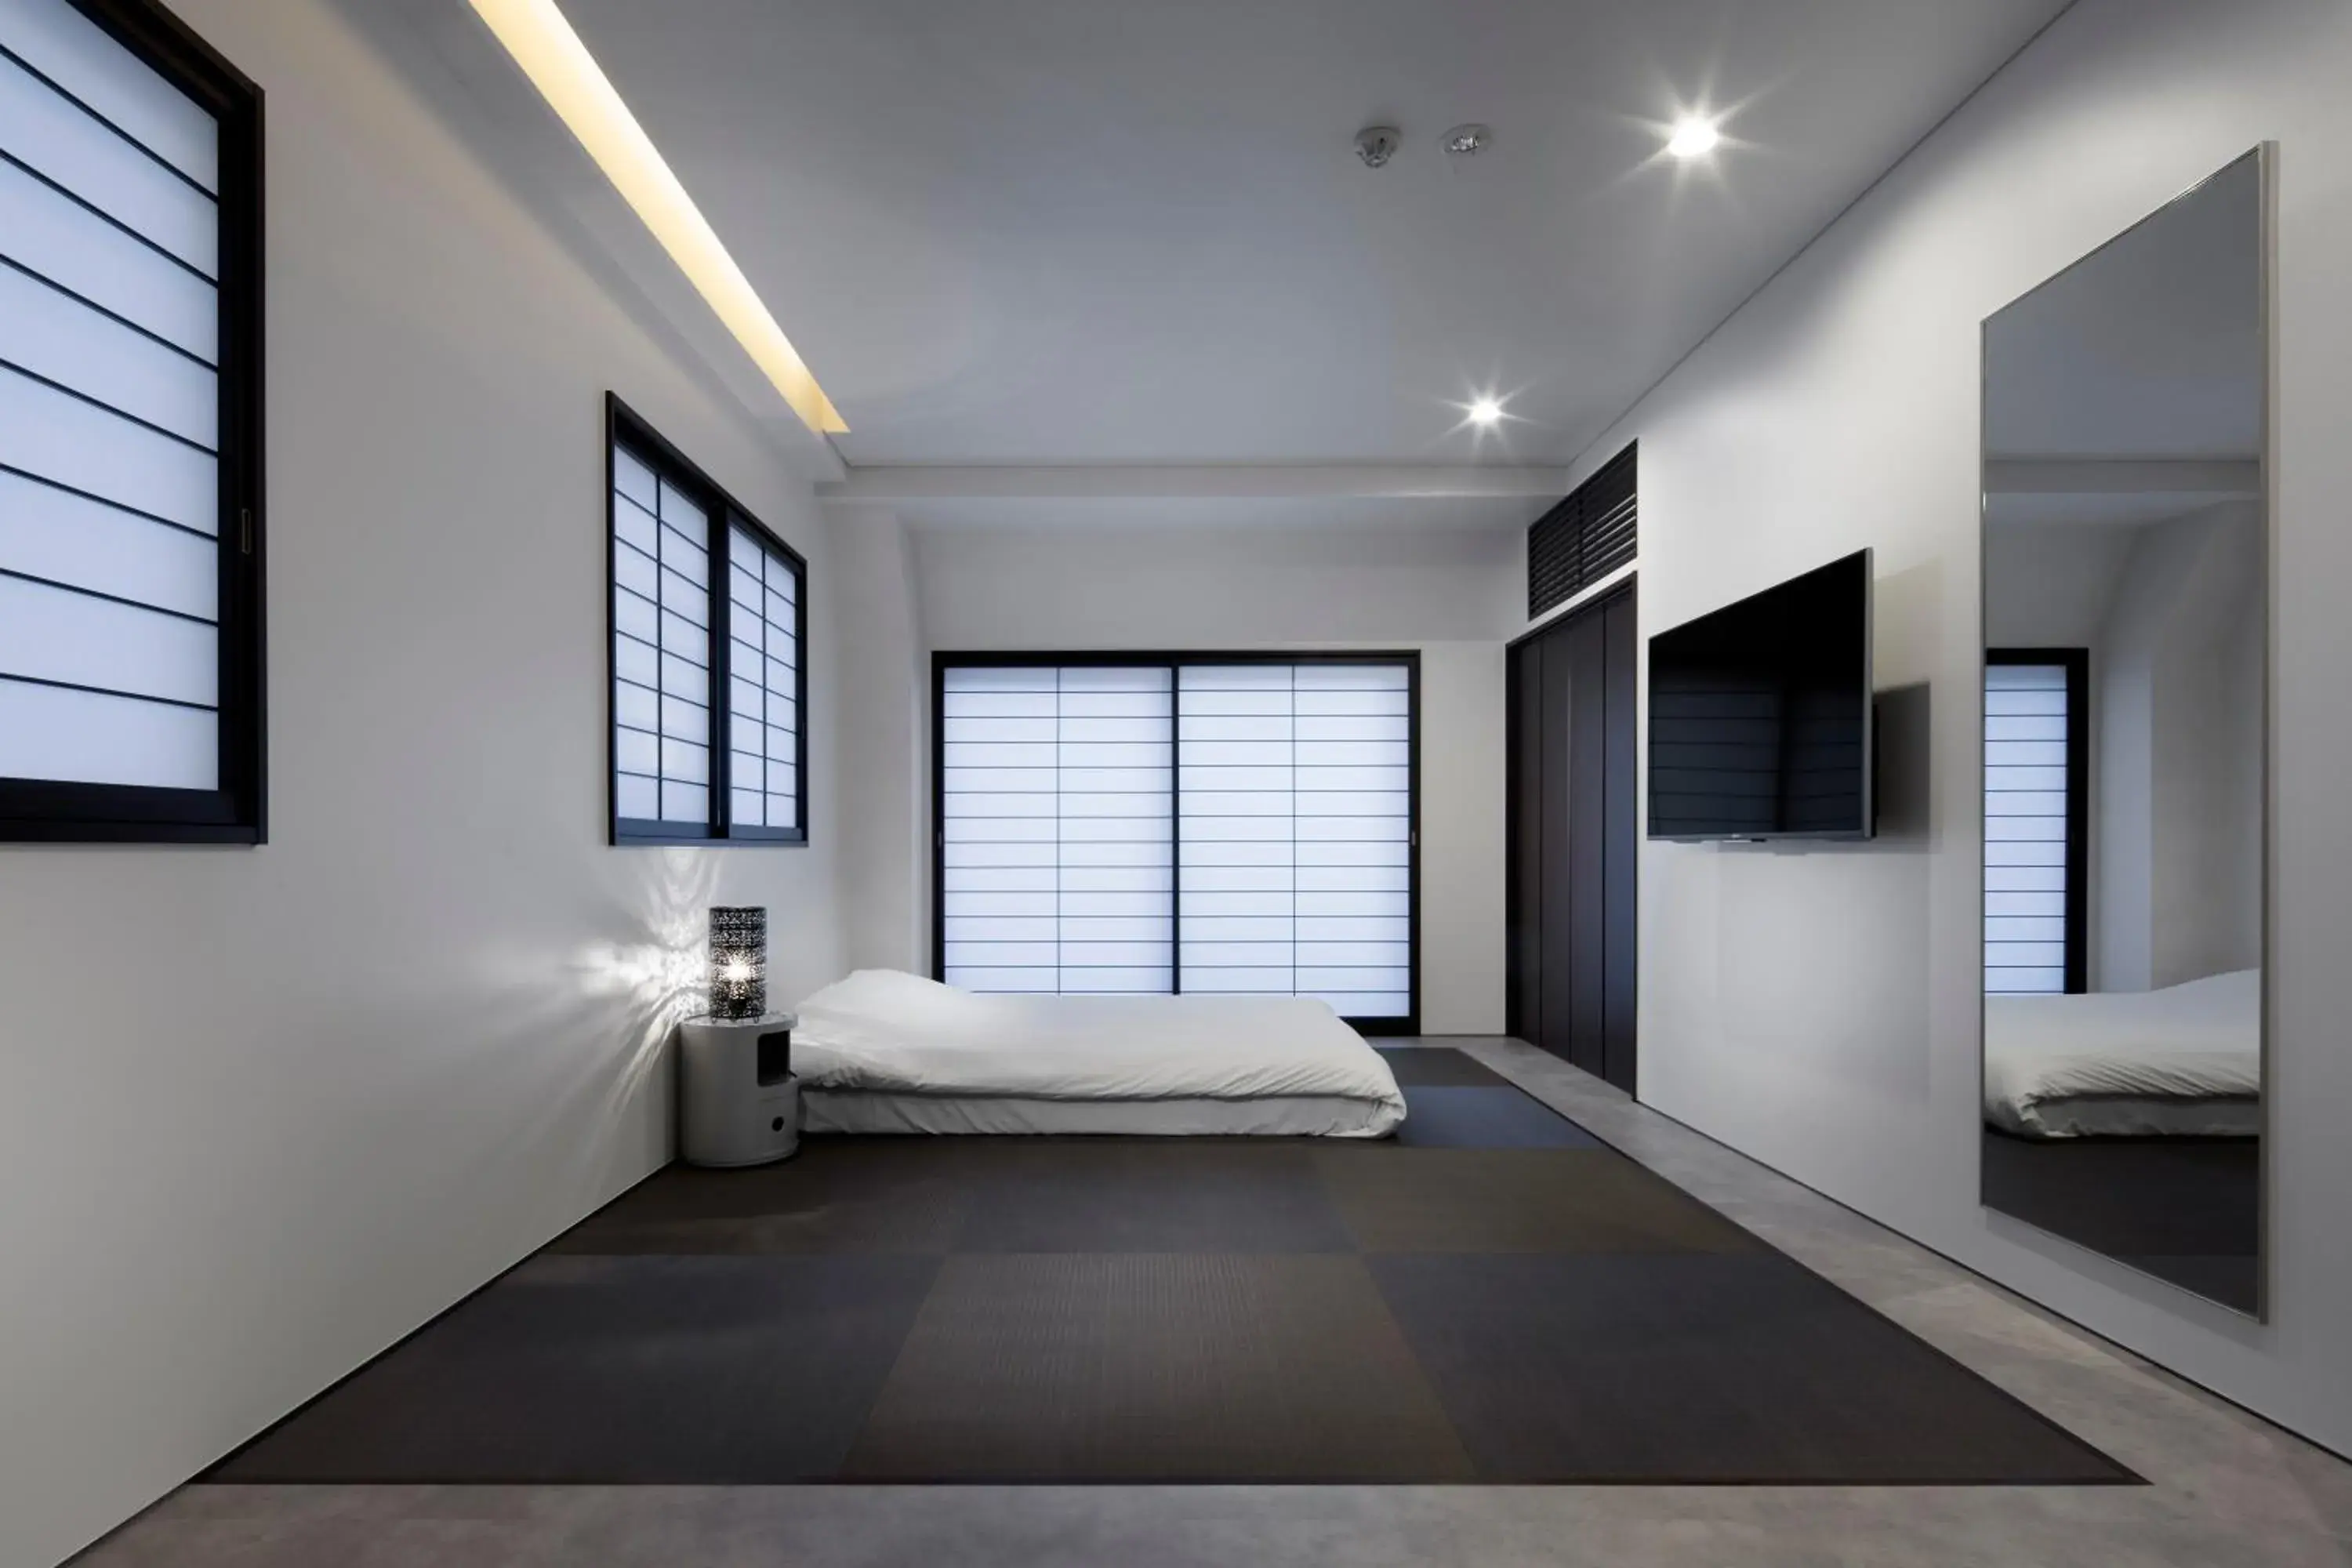 Bed, Room Photo in Shinjuku City Hotel N.U.T.S Tokyo